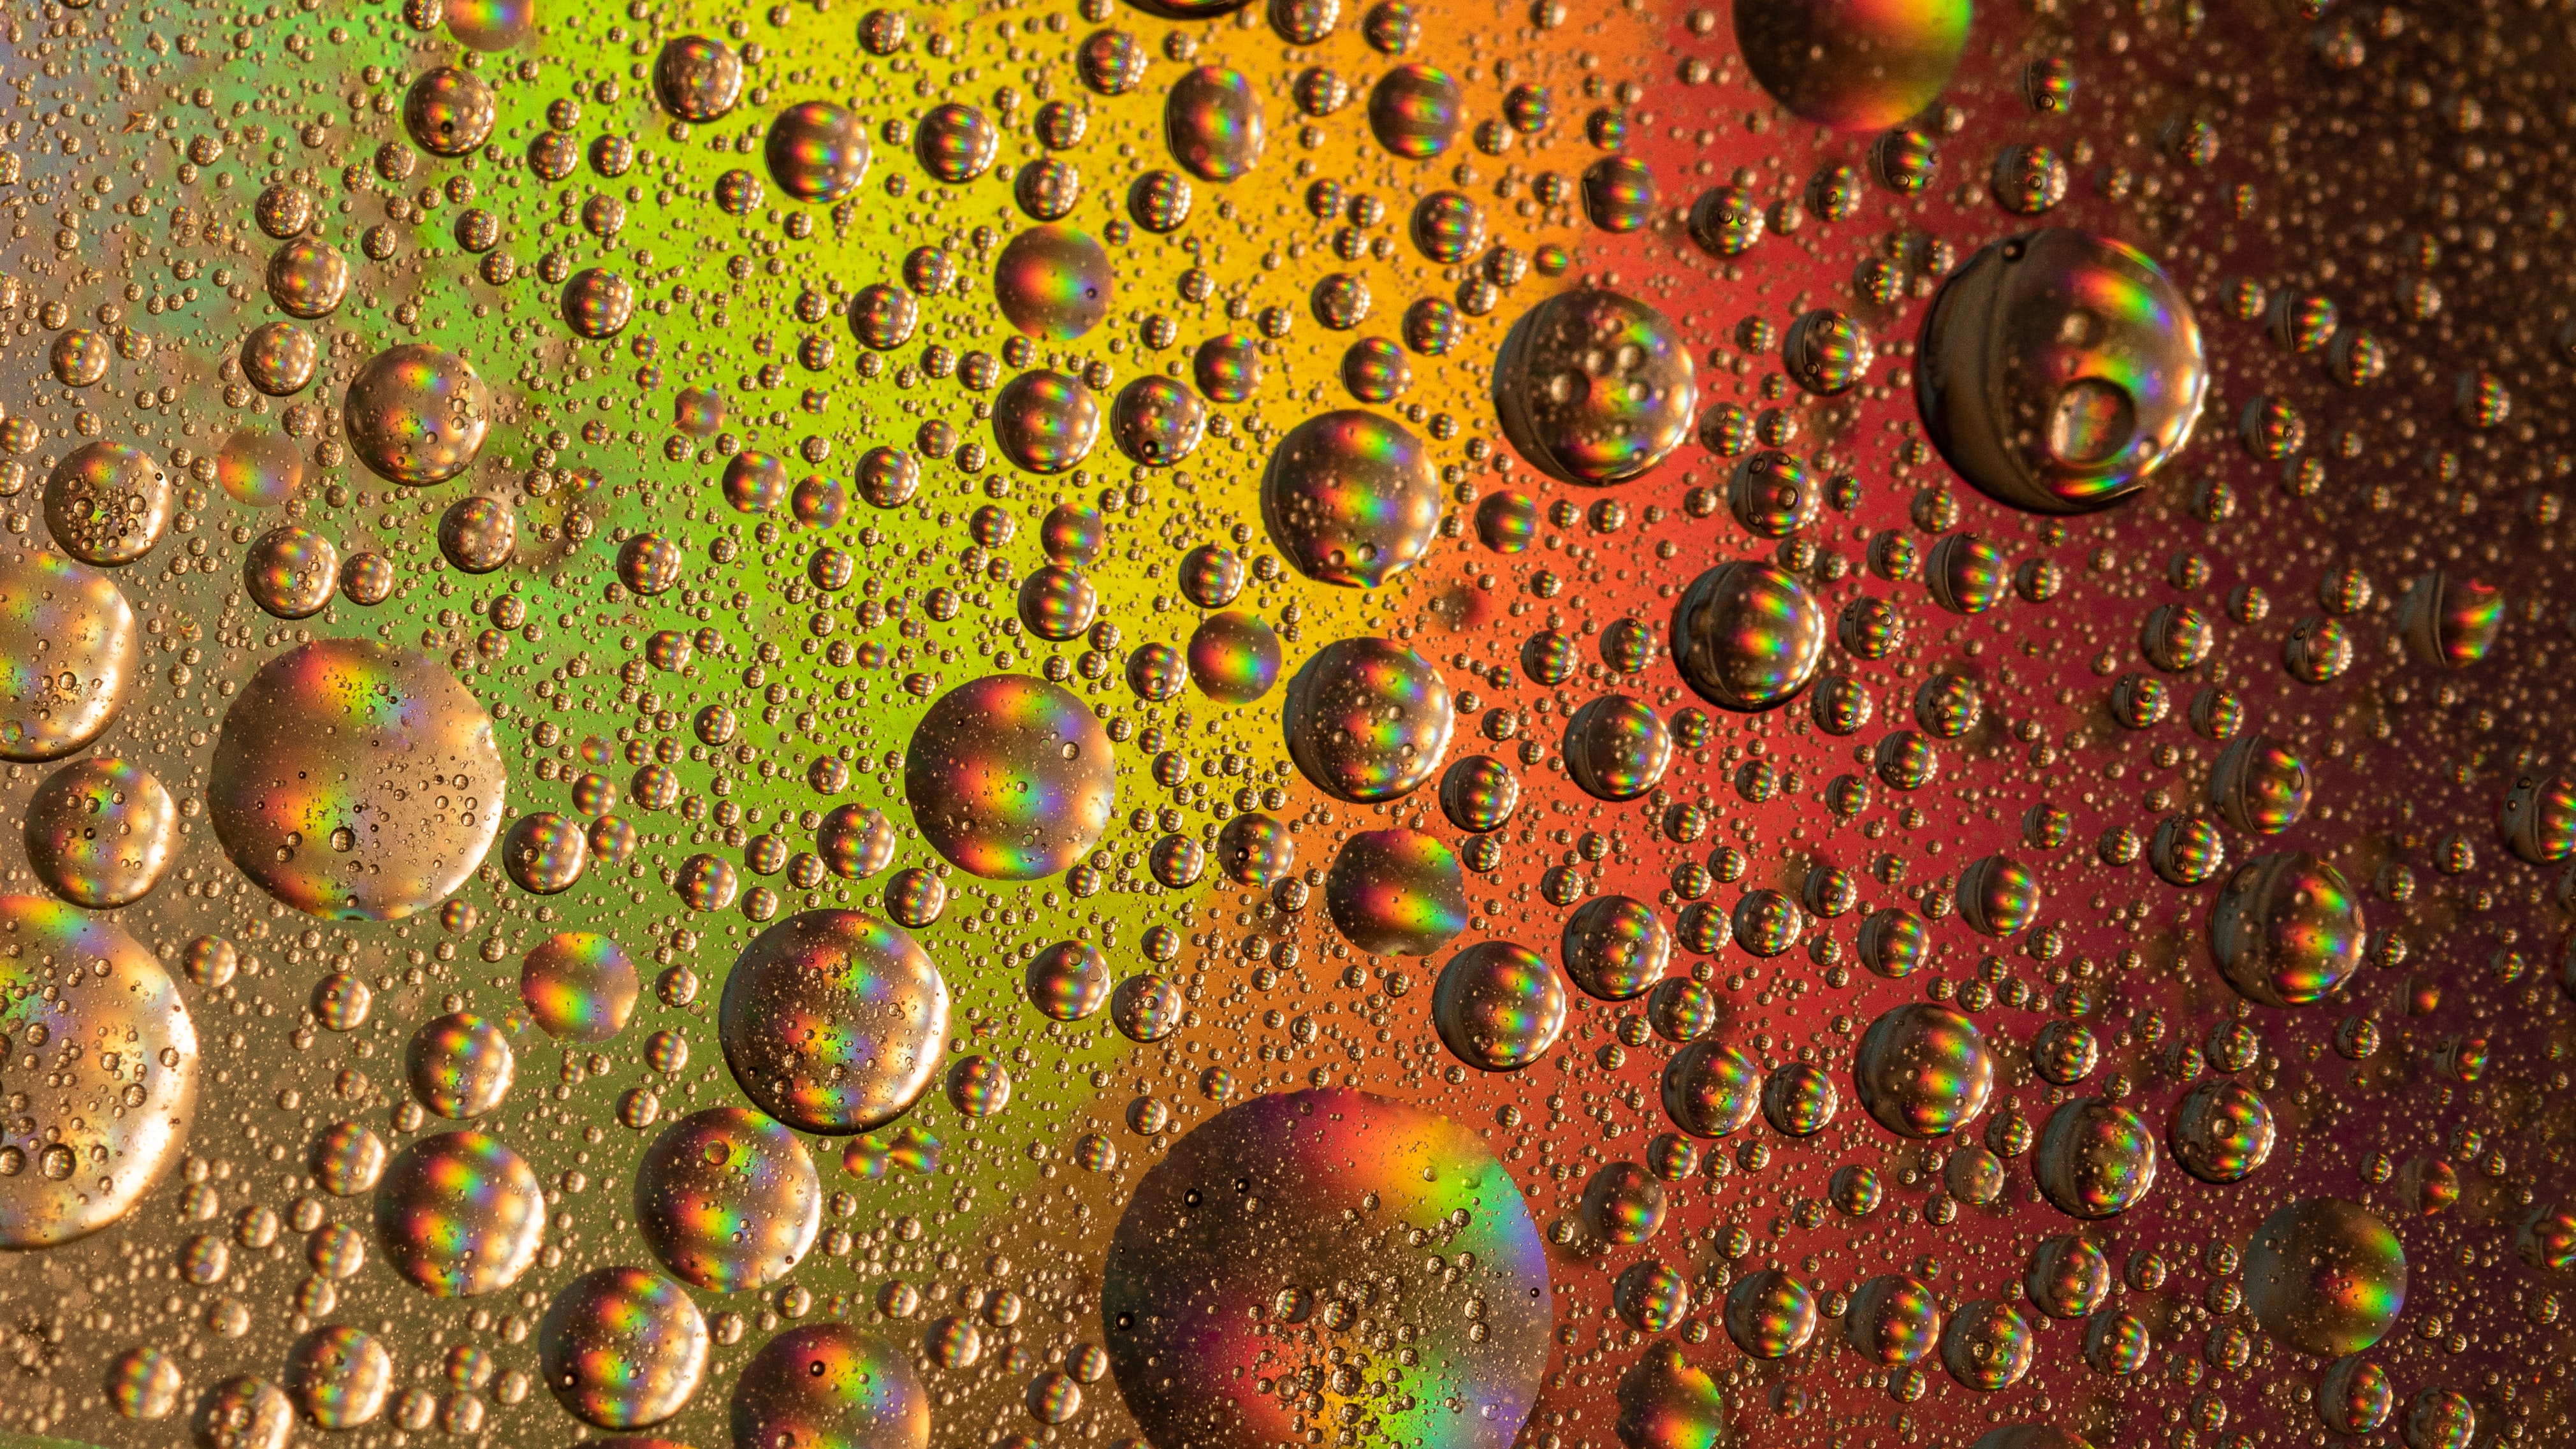 Baixe gratuitamente a imagem Bubbles, Multicolorido, Motley, Abstrato, Drops na área de trabalho do seu PC